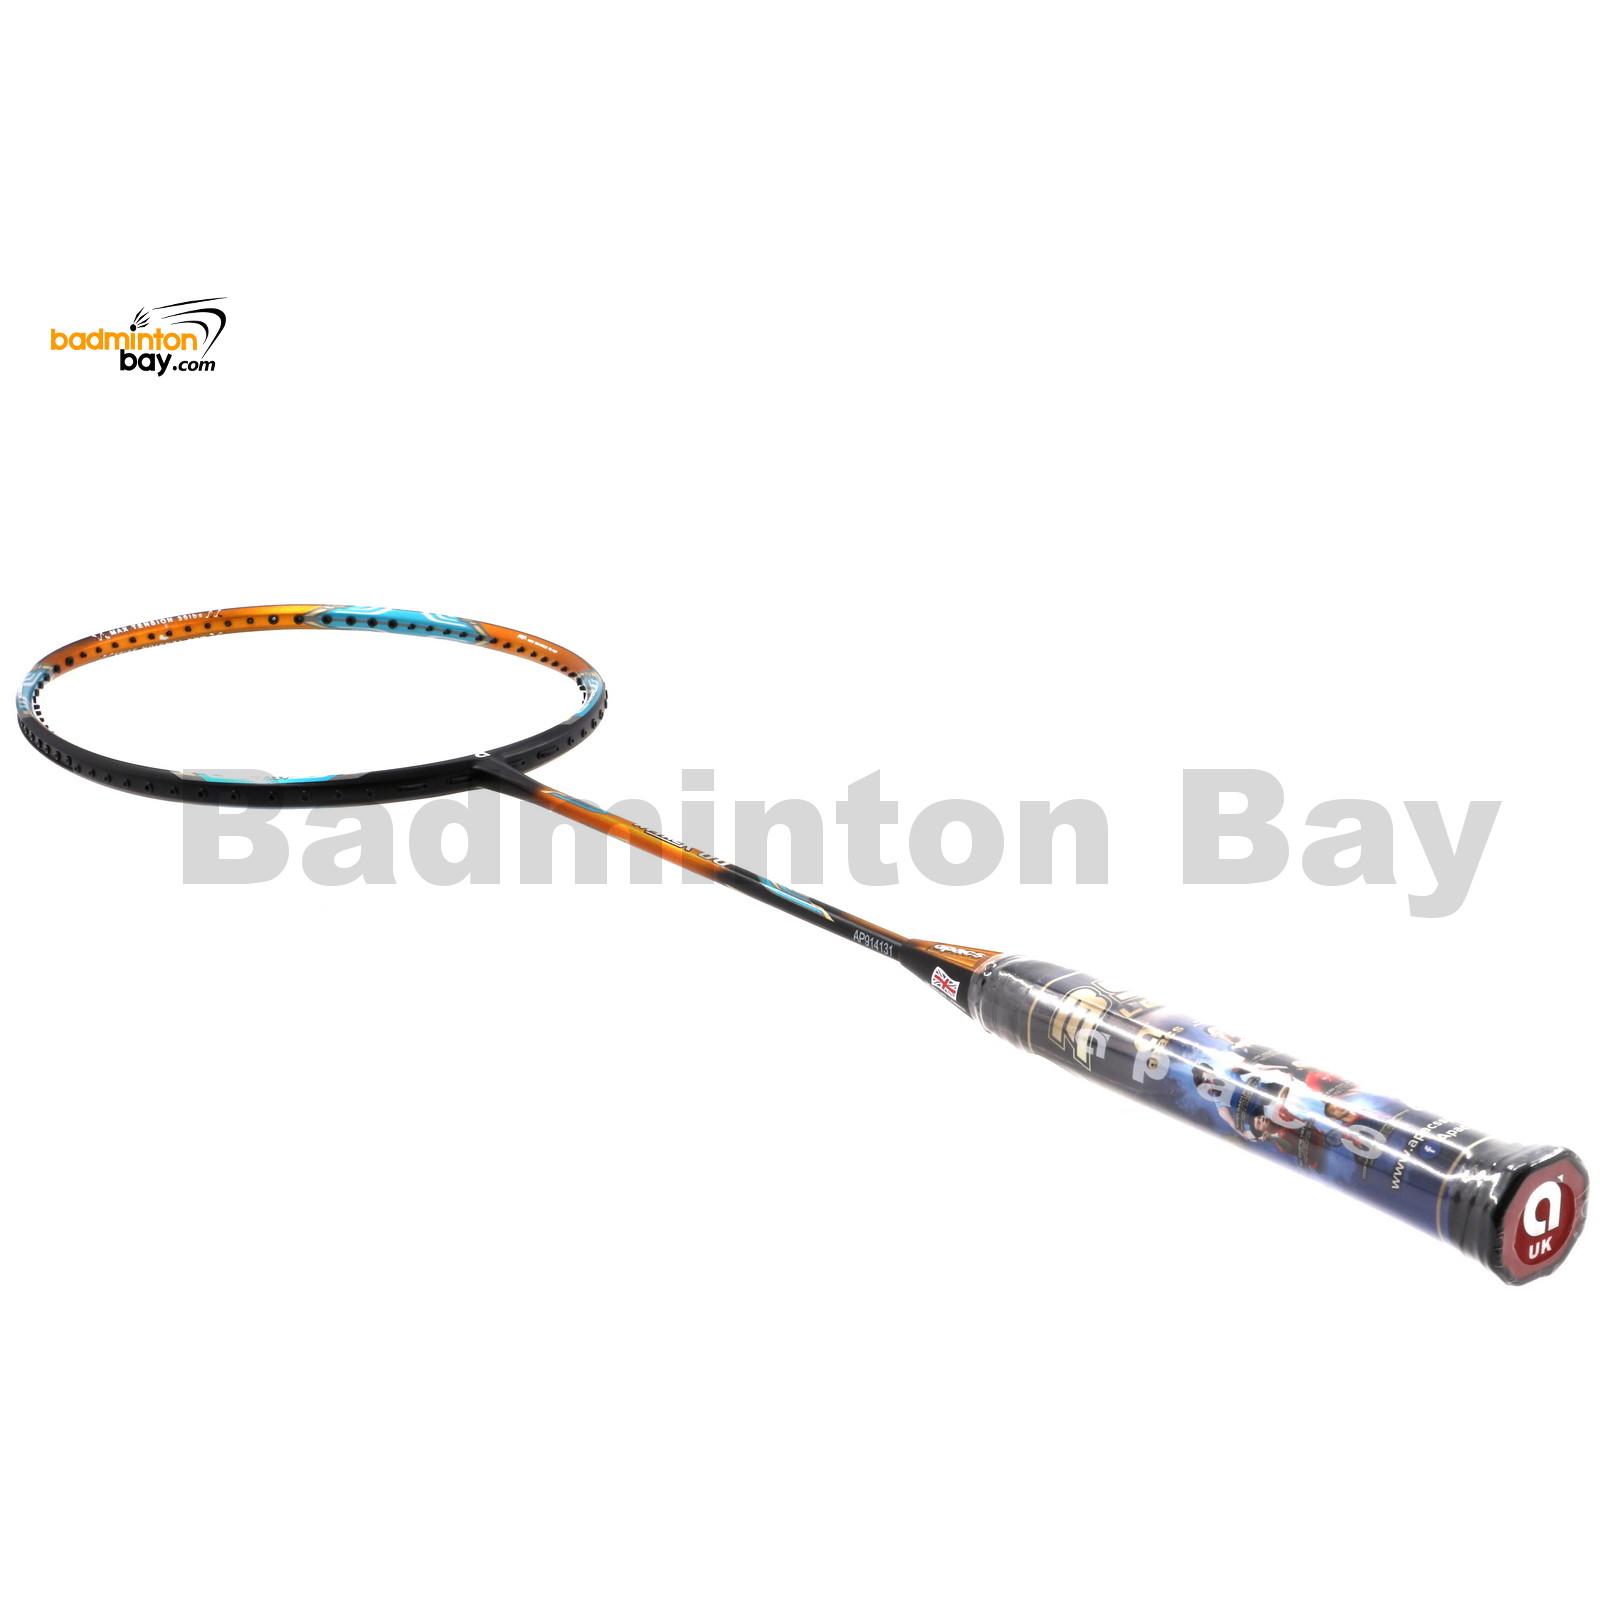 Apacs Attack 66 Black Gold Badminton Racket (5U)